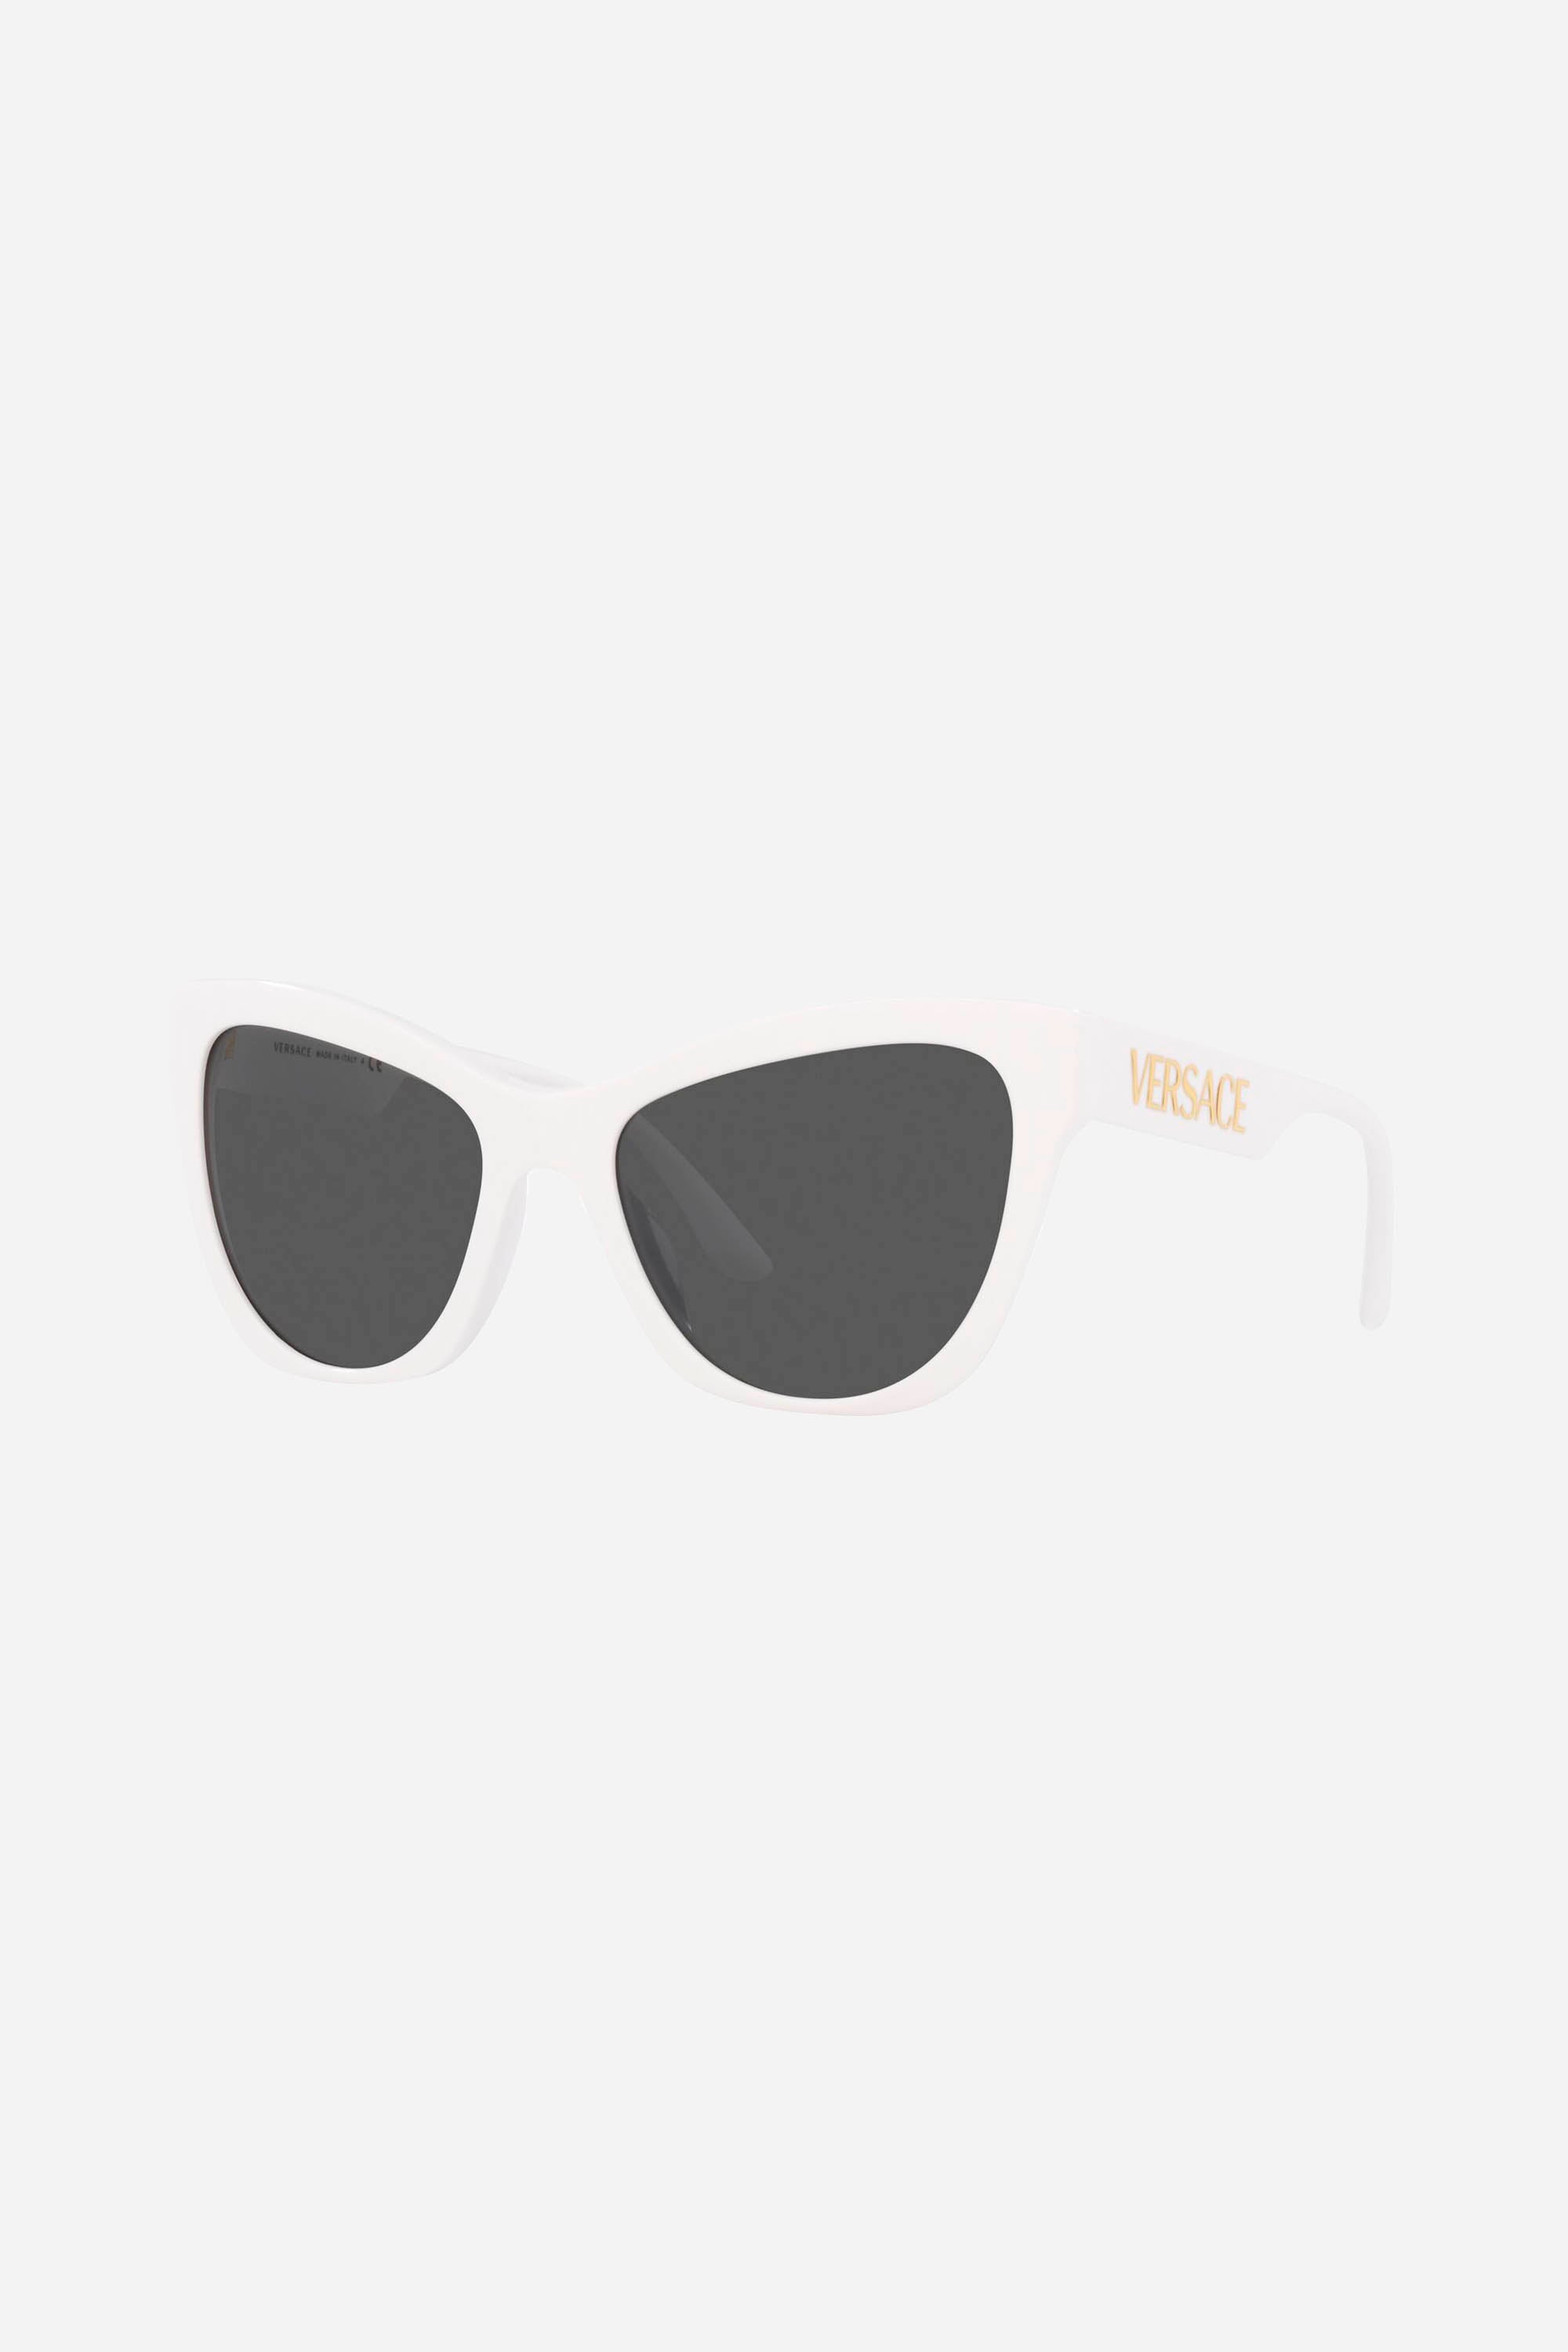 Versace cat eye white sunglasses - Eyewear Club